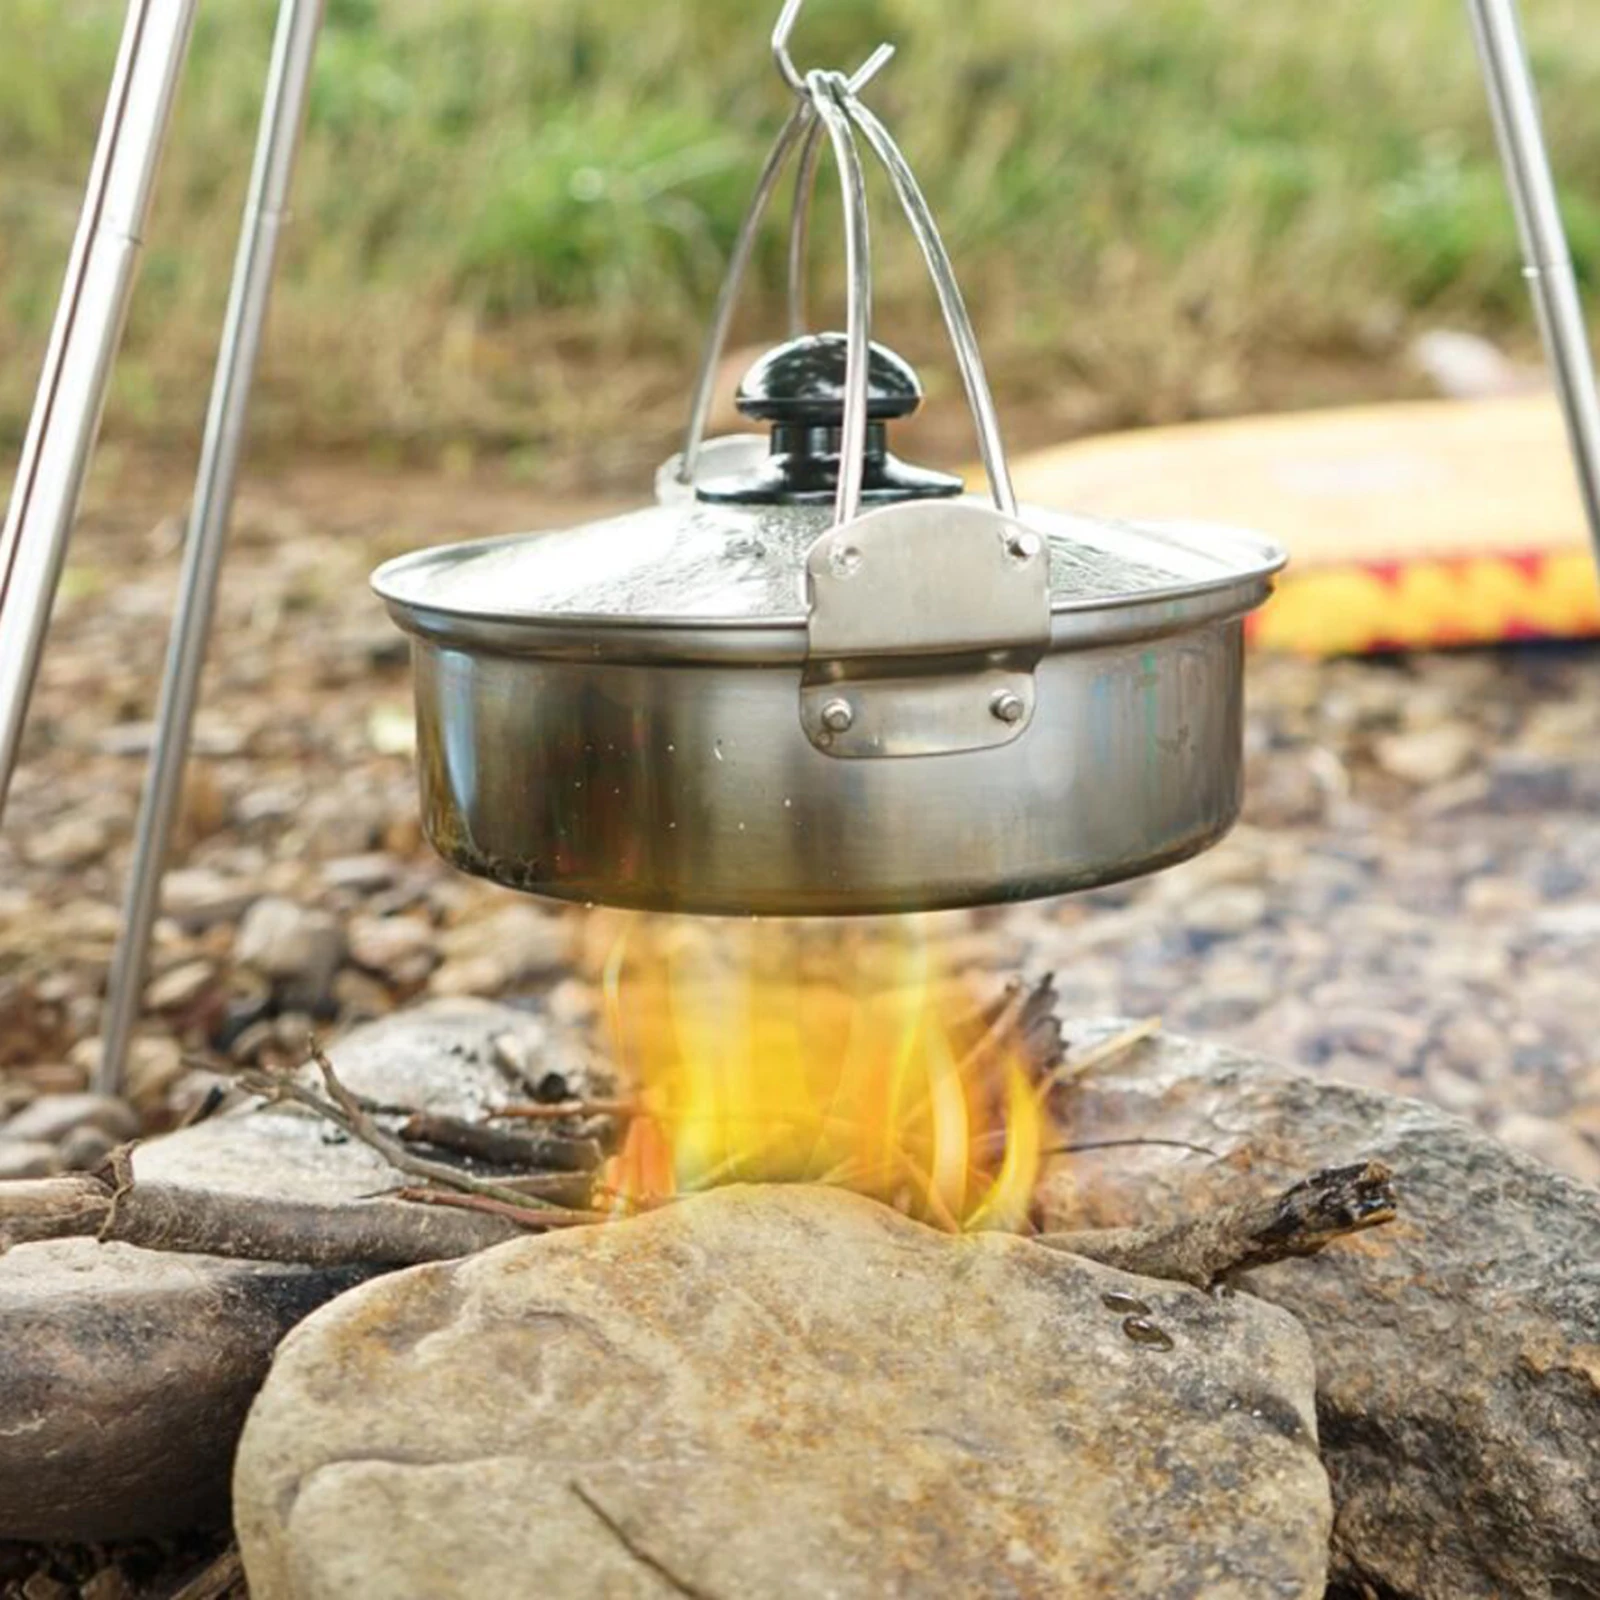 Camping Cookware Korean Ramen Noodle Pot - Stainless Steel Stock Pot Outdoor Hiking Backpacking Instant Ramen Noodle Pot